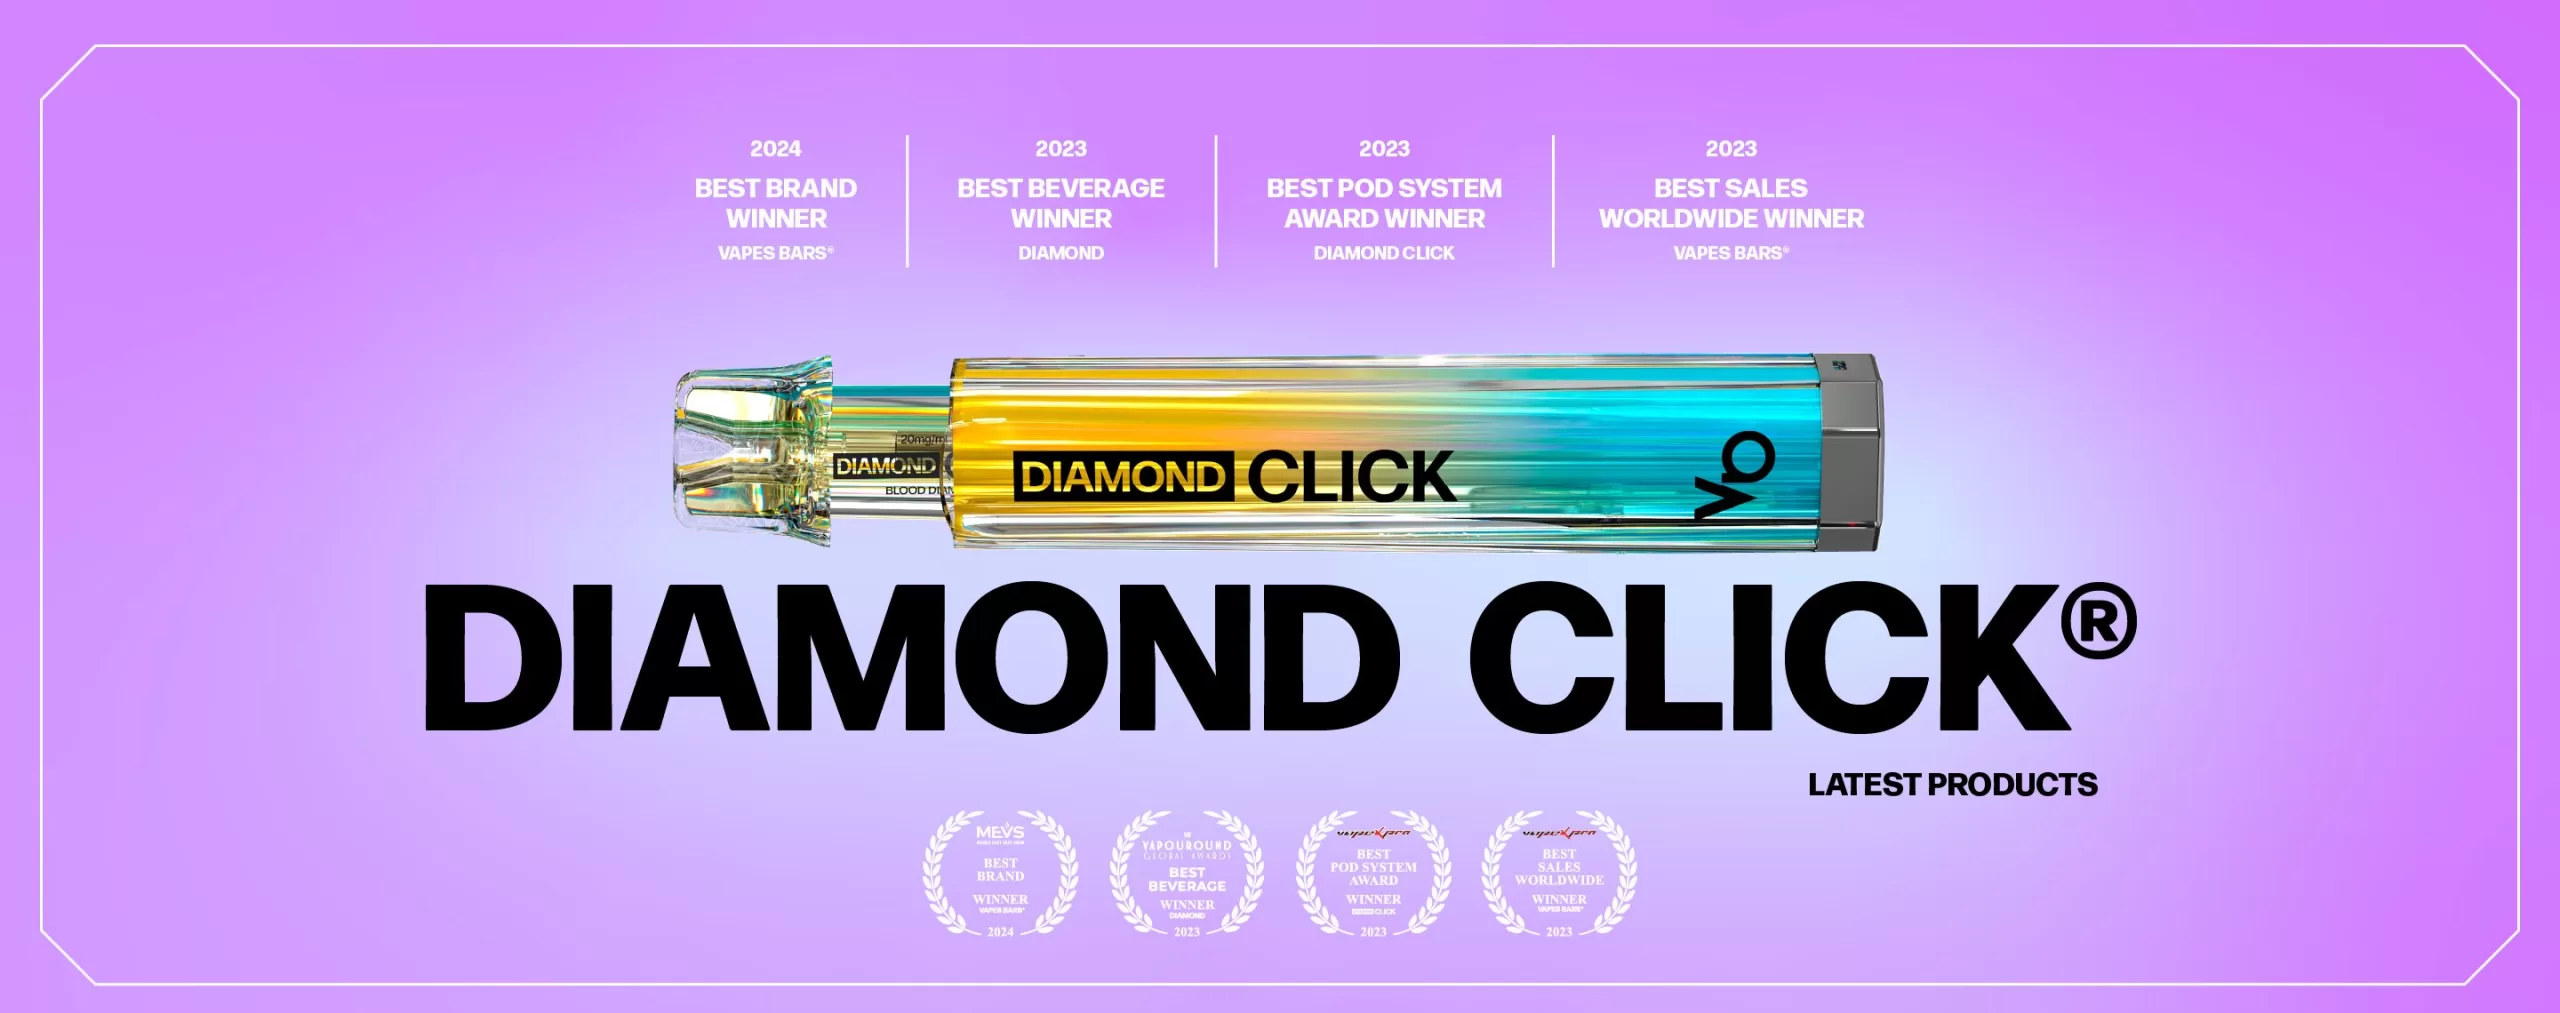 Diamond Click-Banner 2 copy 2